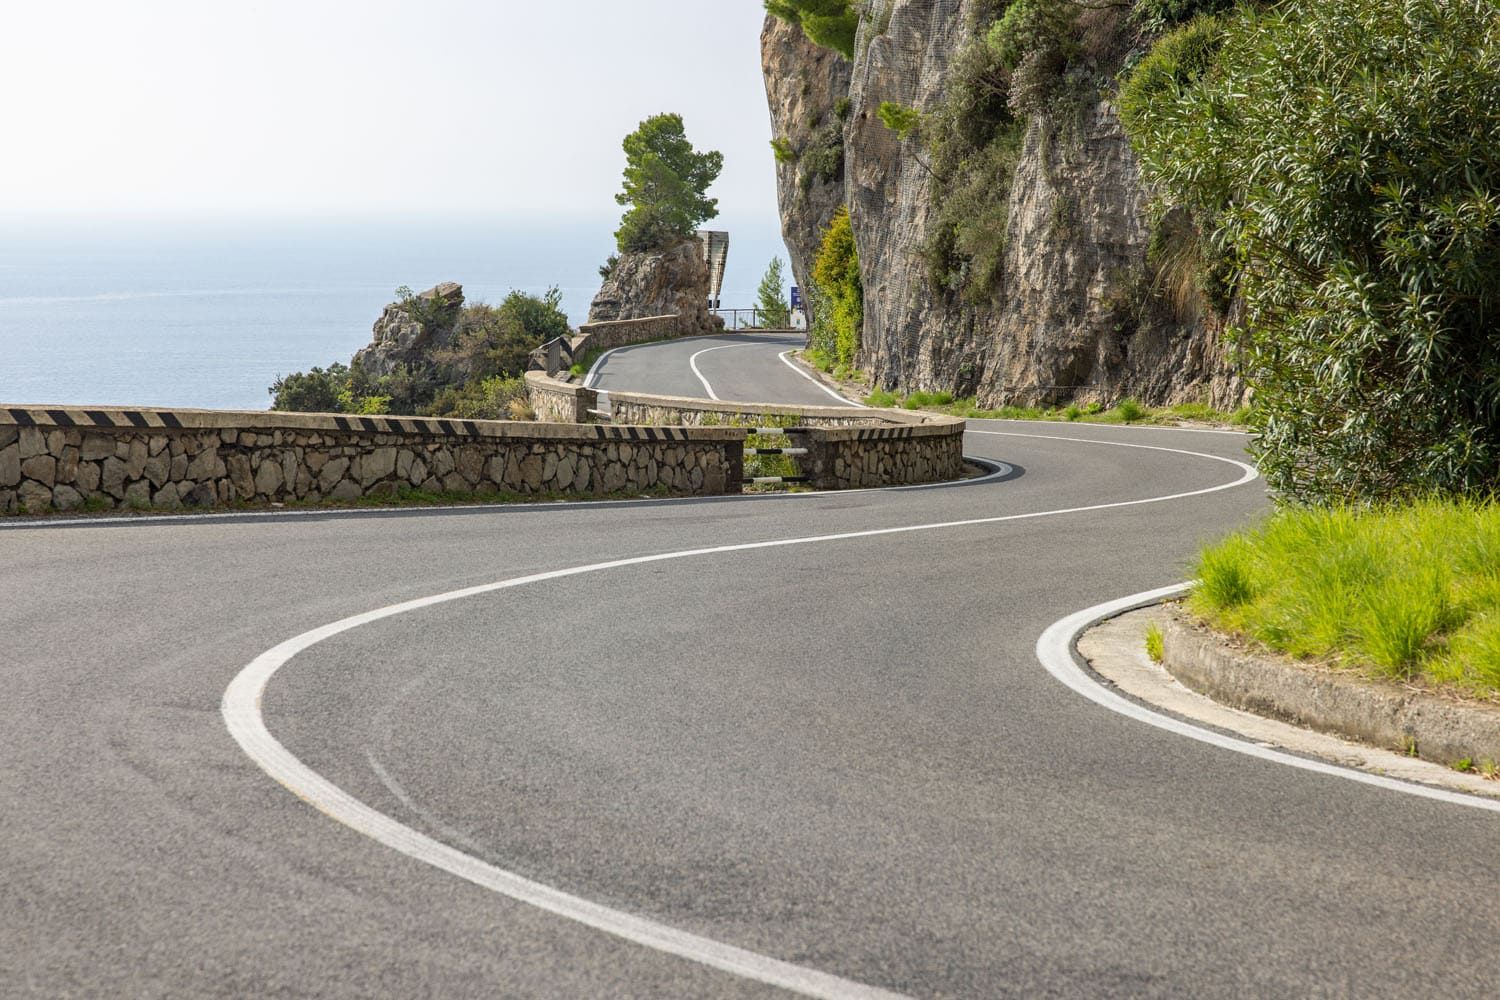 How to Drive the Amalfi Coast | Best way to get around the Amalfi Coast